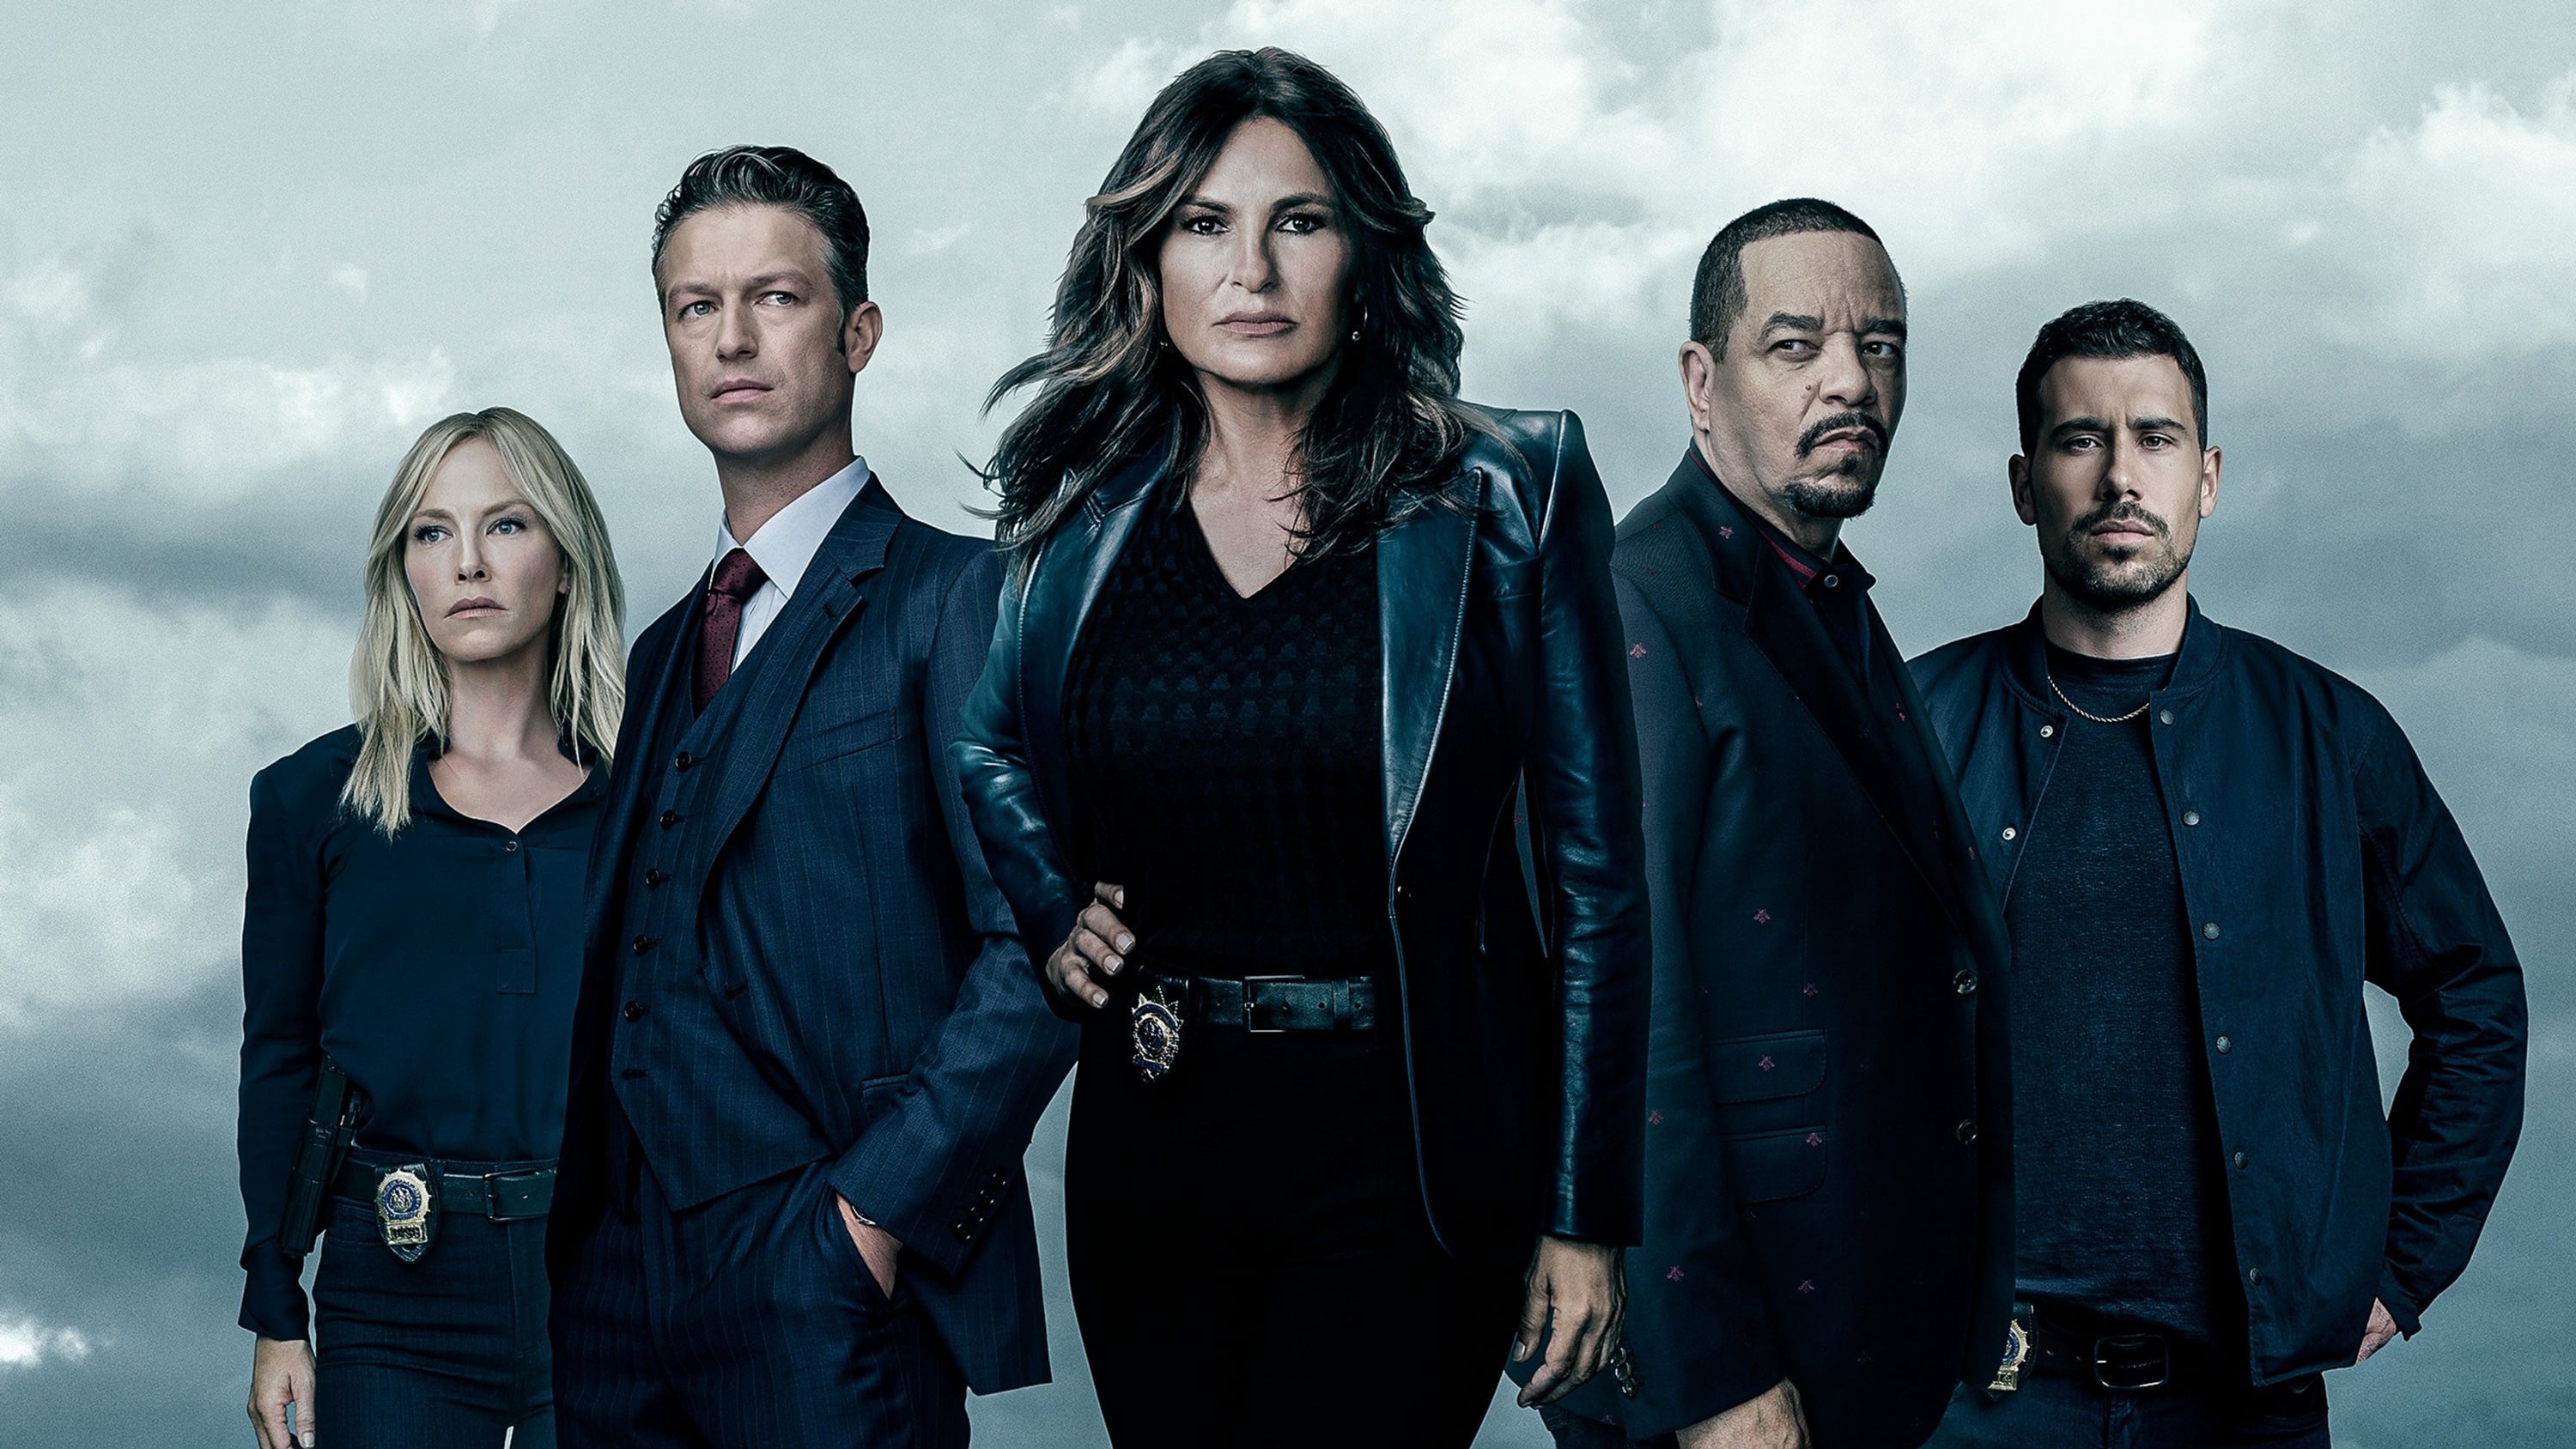 Law & Order: Special Victims Unit - Season 1 Episode 15